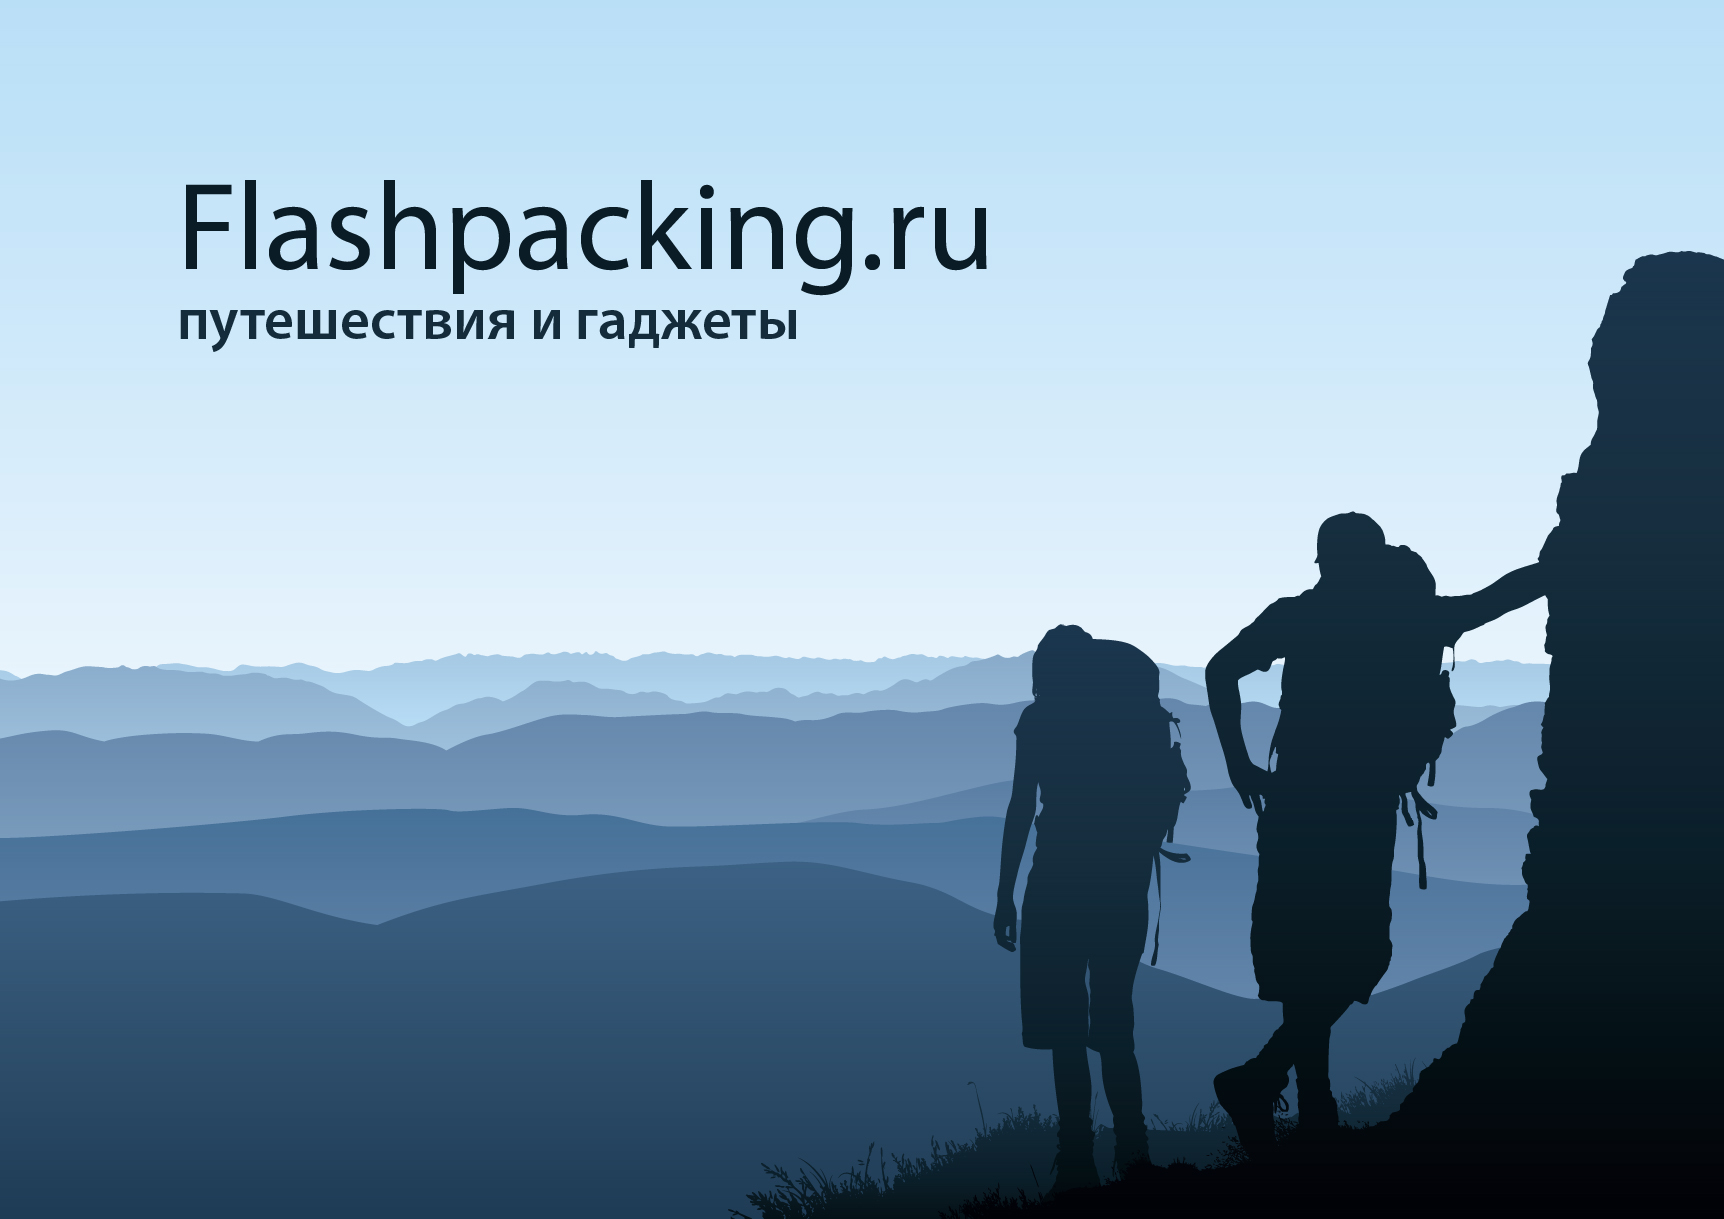 Flashpacking - путешествия и гаджеты (blue)